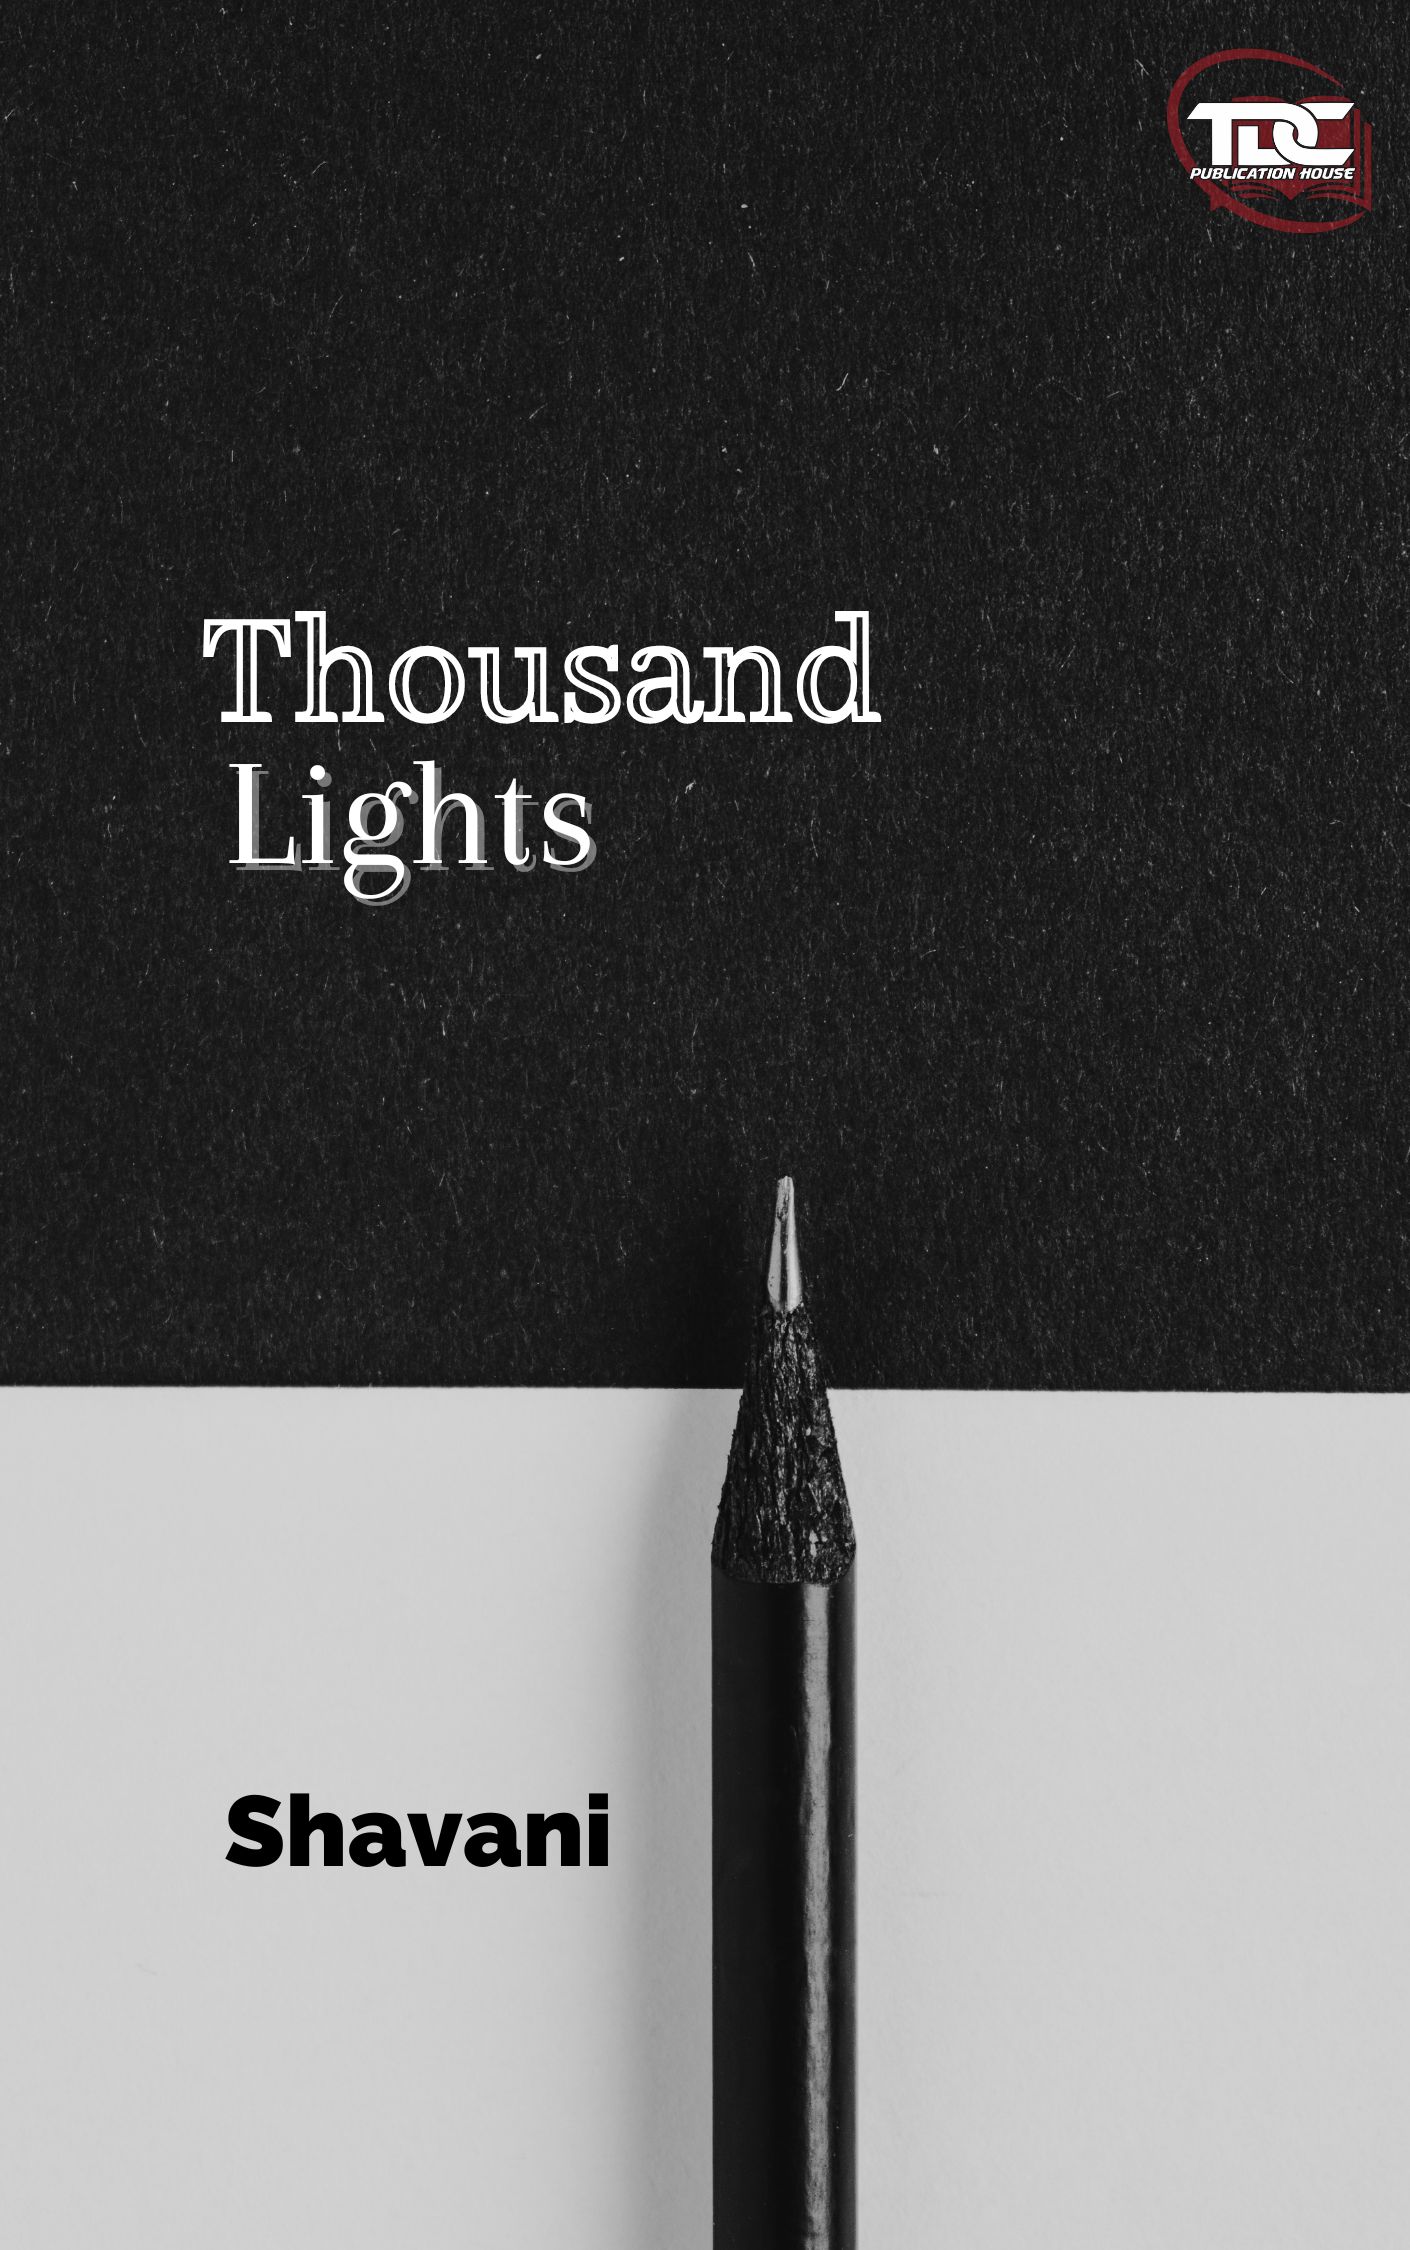 Thousand Lights